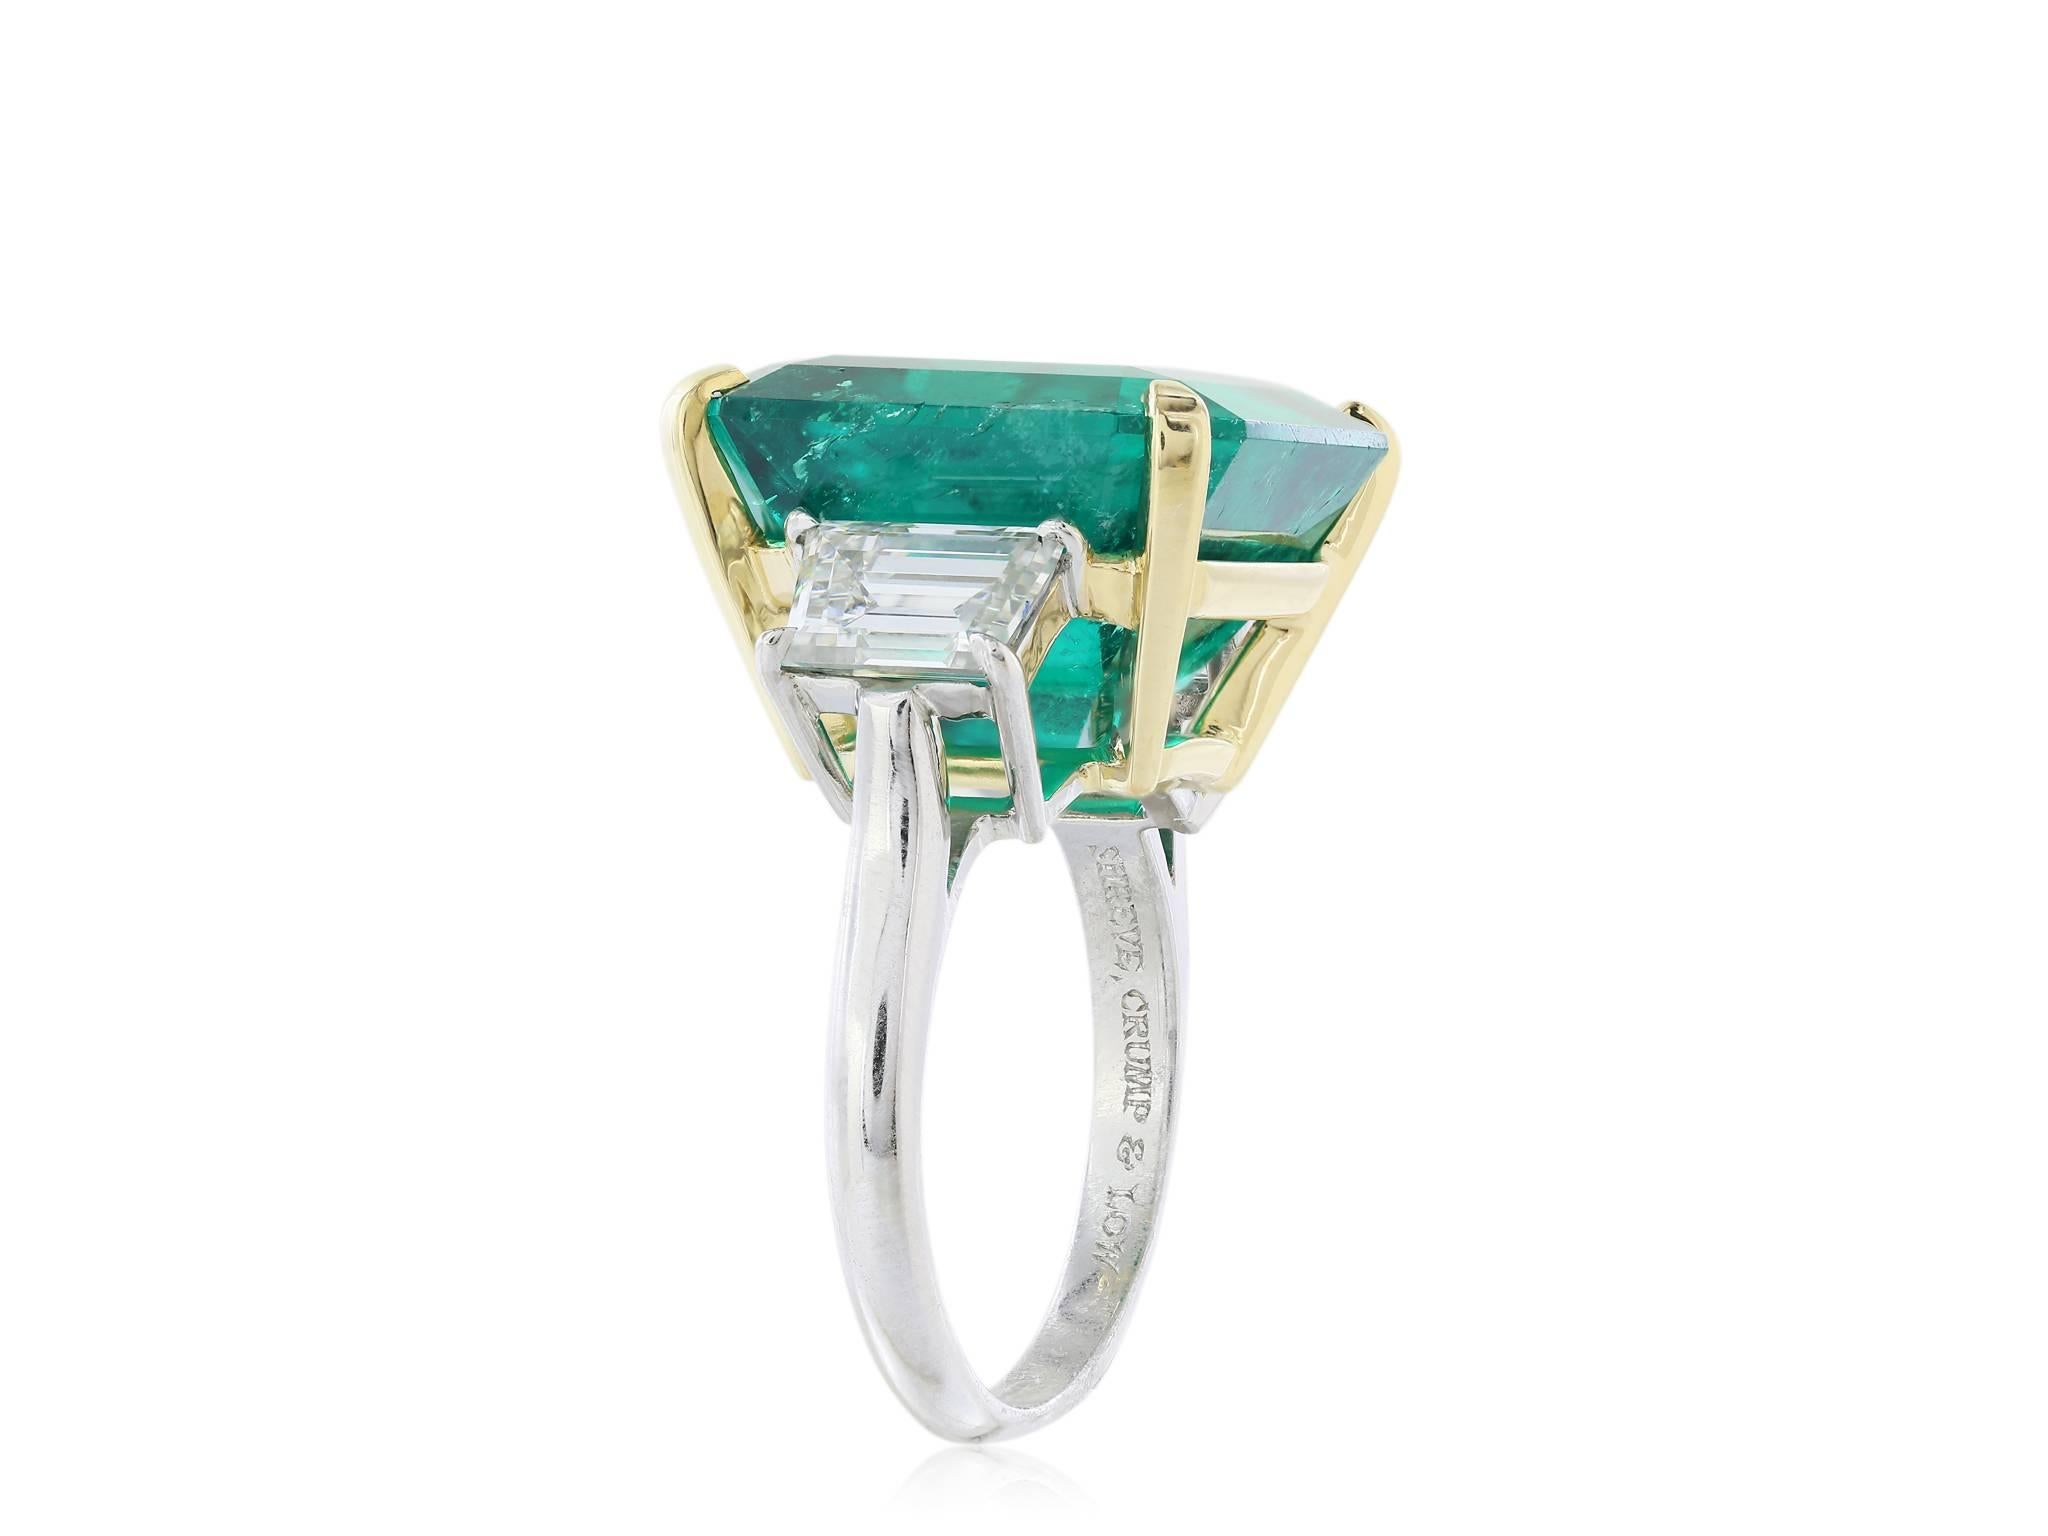 Emerald Cut Shreve, Crump & Low Magnificent 16.11 carat AGL Colombian Emerald & Diamond Ring For Sale